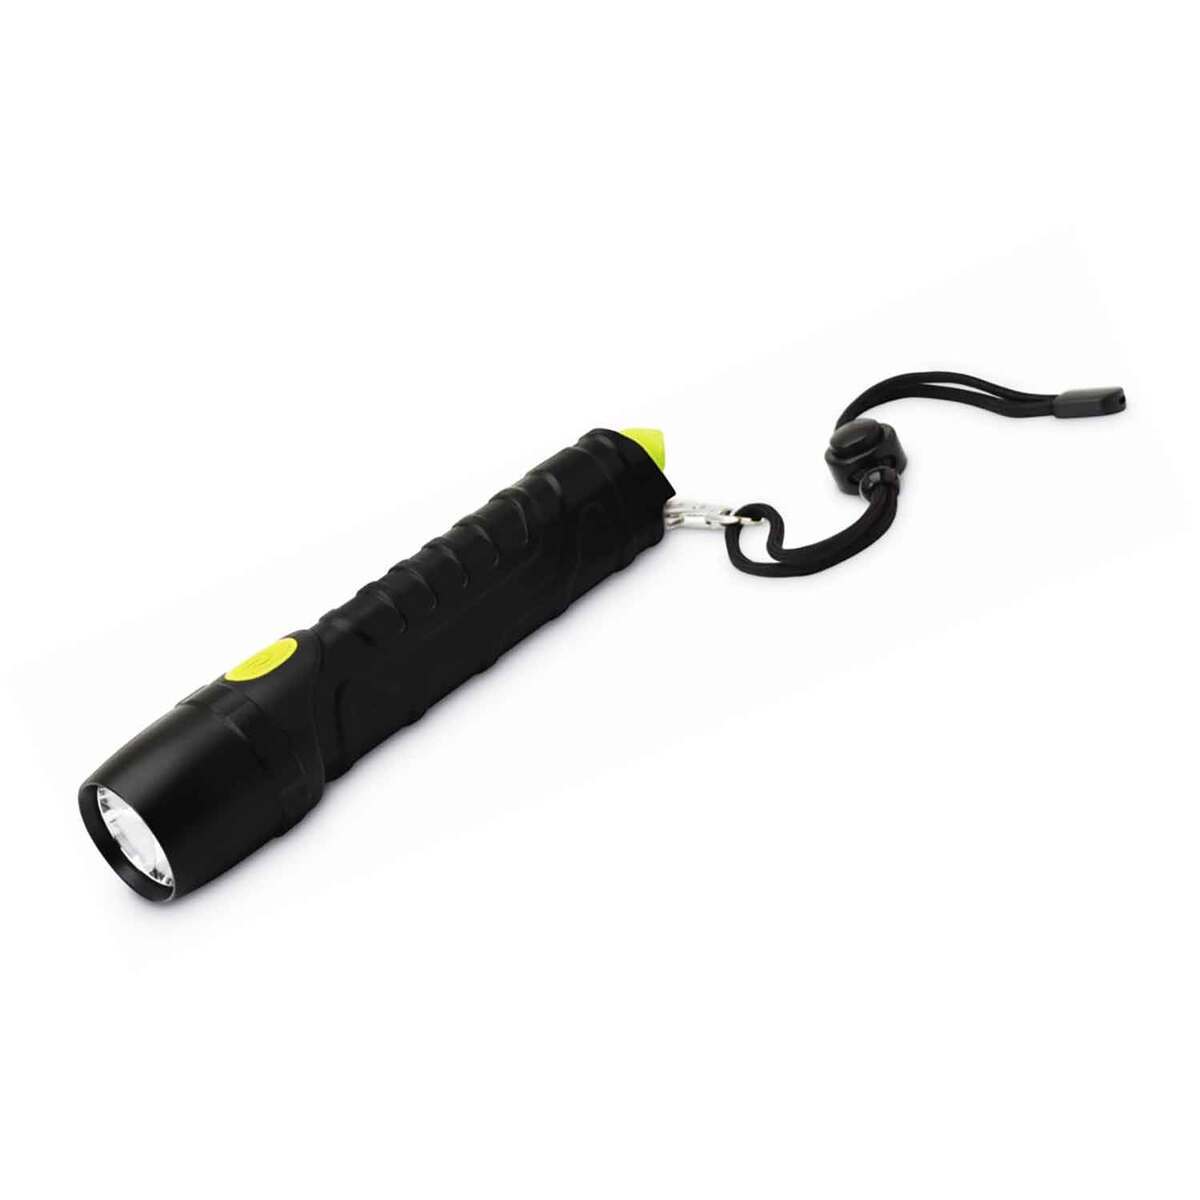 https://www.sportsmans.com/medias/cyclops-800-lumen-led-flashlight-with-emergency-glass-breaker-1441892-1.jpg?context=bWFzdGVyfGltYWdlc3wyMzE0NnxpbWFnZS9qcGVnfGg1OS9oMmEvMTA4MjY3NzIwODY4MTQvMTQ0MTg5Mi0xX2Jhc2UtY29udmVyc2lvbkZvcm1hdF8xMjAwLWNvbnZlcnNpb25Gb3JtYXR8YjdjYWIzNTJkZWNmMTc0YTkwNWM2ZWNlMDM5YzY4NTA1YmE1OTI4NWNiODZmYmFhMjQwZmY3ZTQ1ZDU0NGMzNw